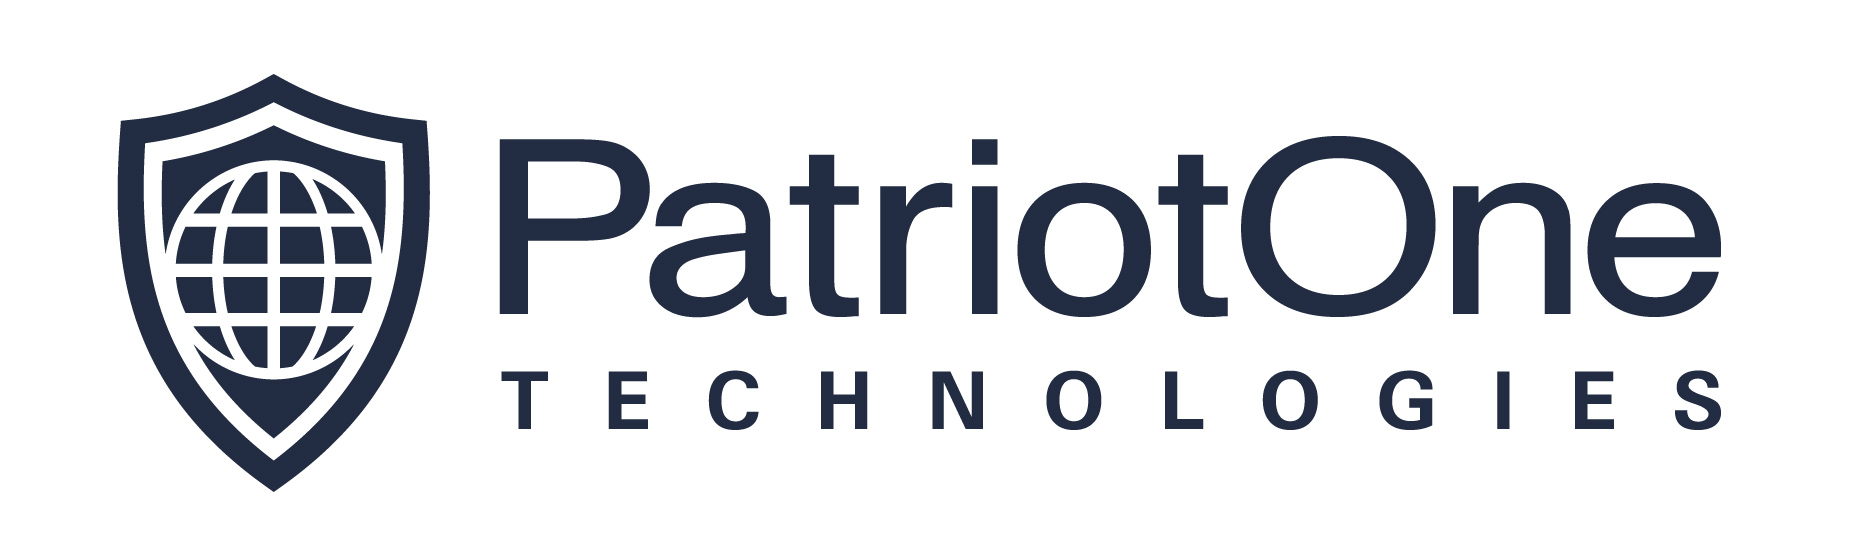 Patriot One-logo-blue.jpg